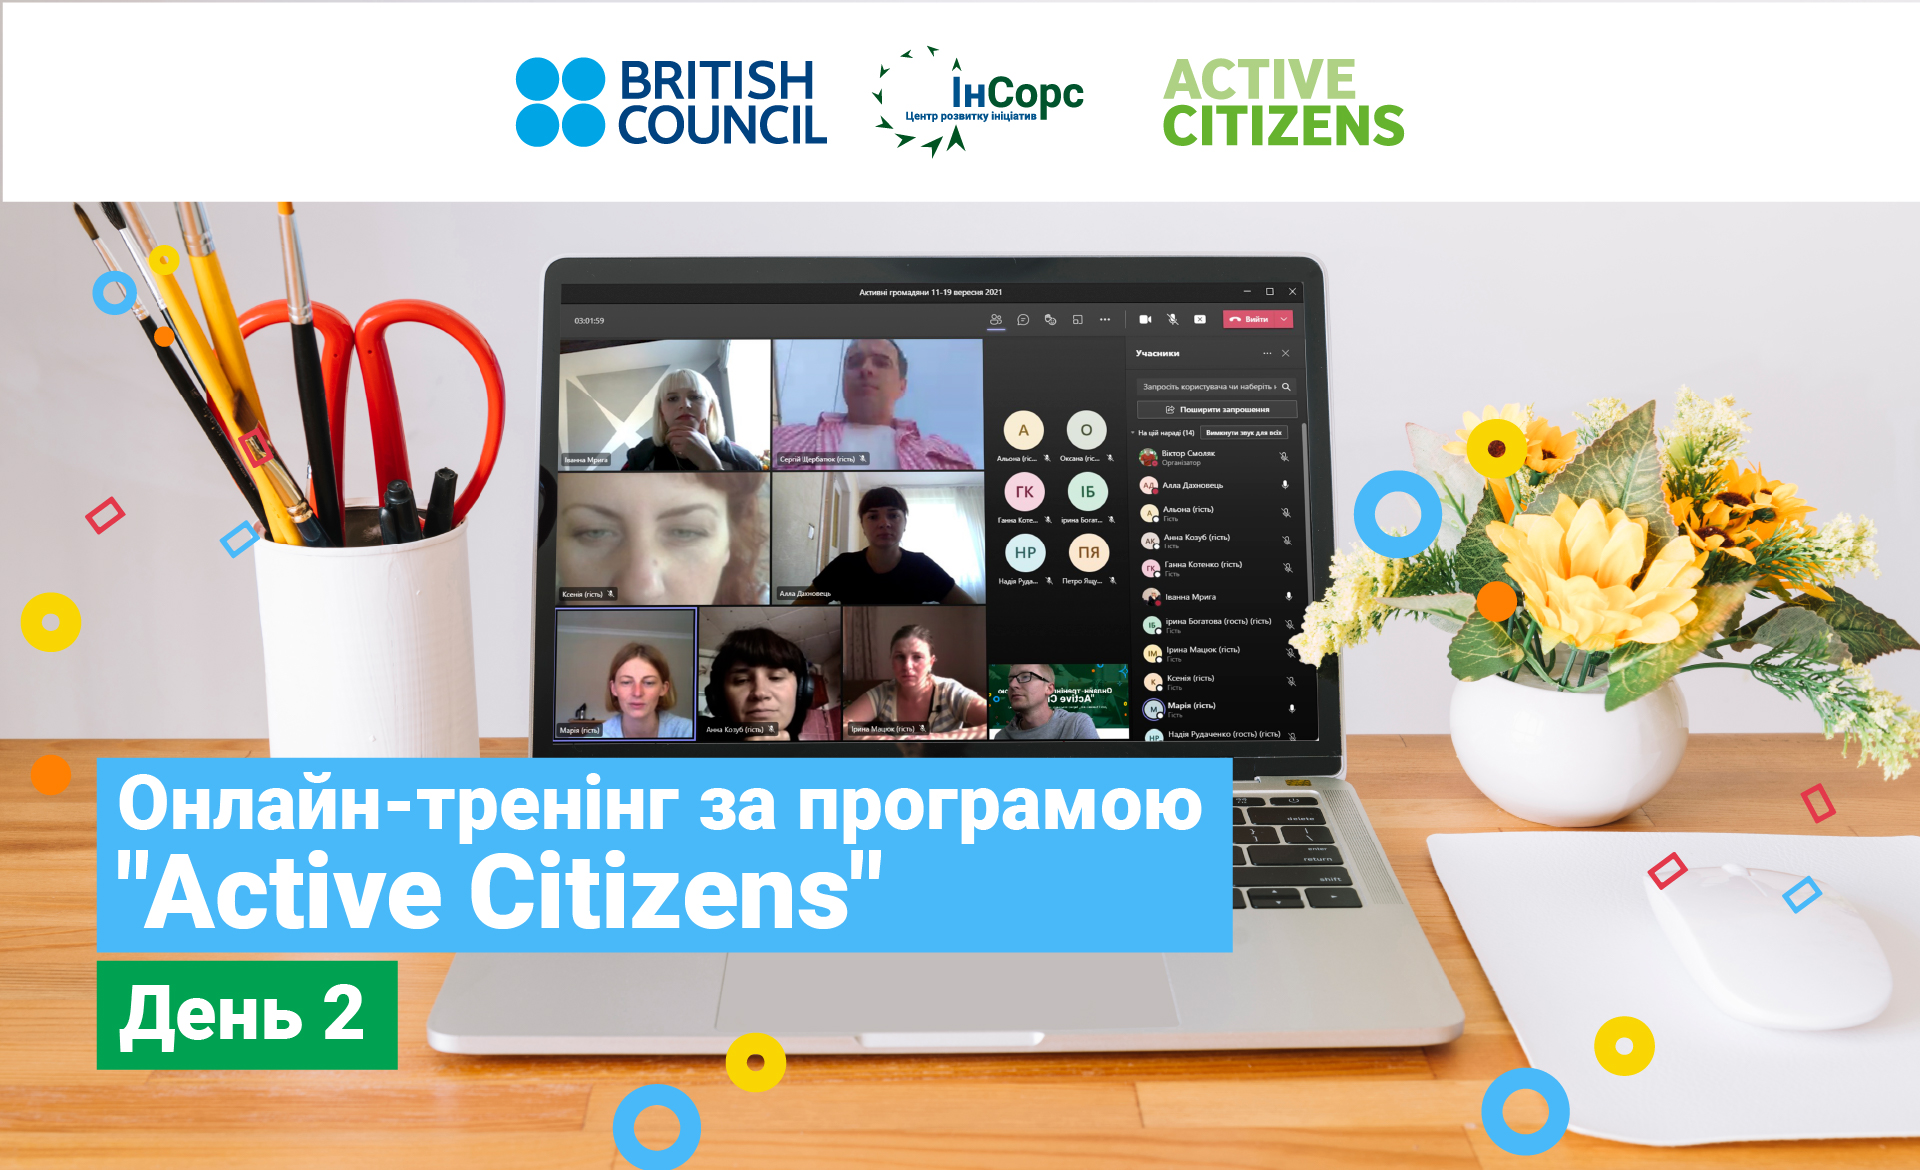 Другий день онлайн-тренінгу за програмою “Active Citizens”